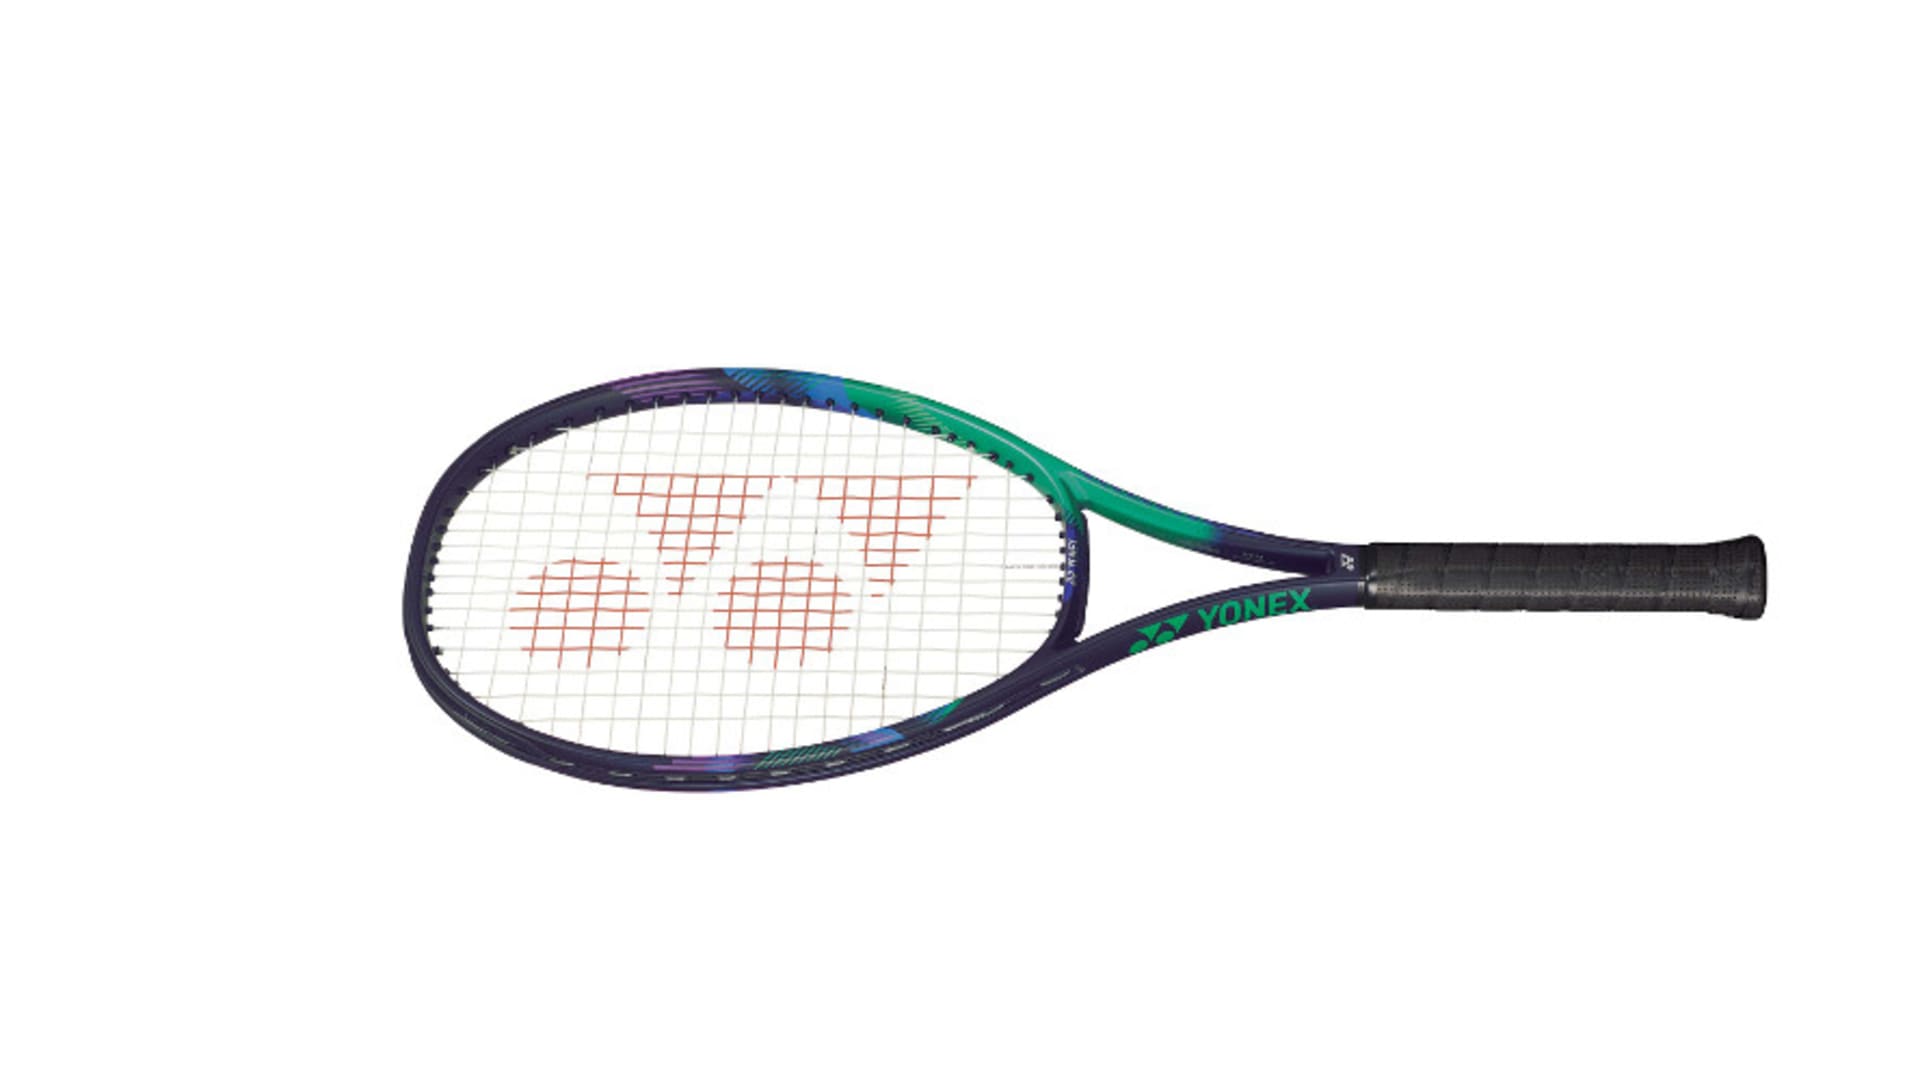 Racquet Review: Yonex VCORE PRO 100